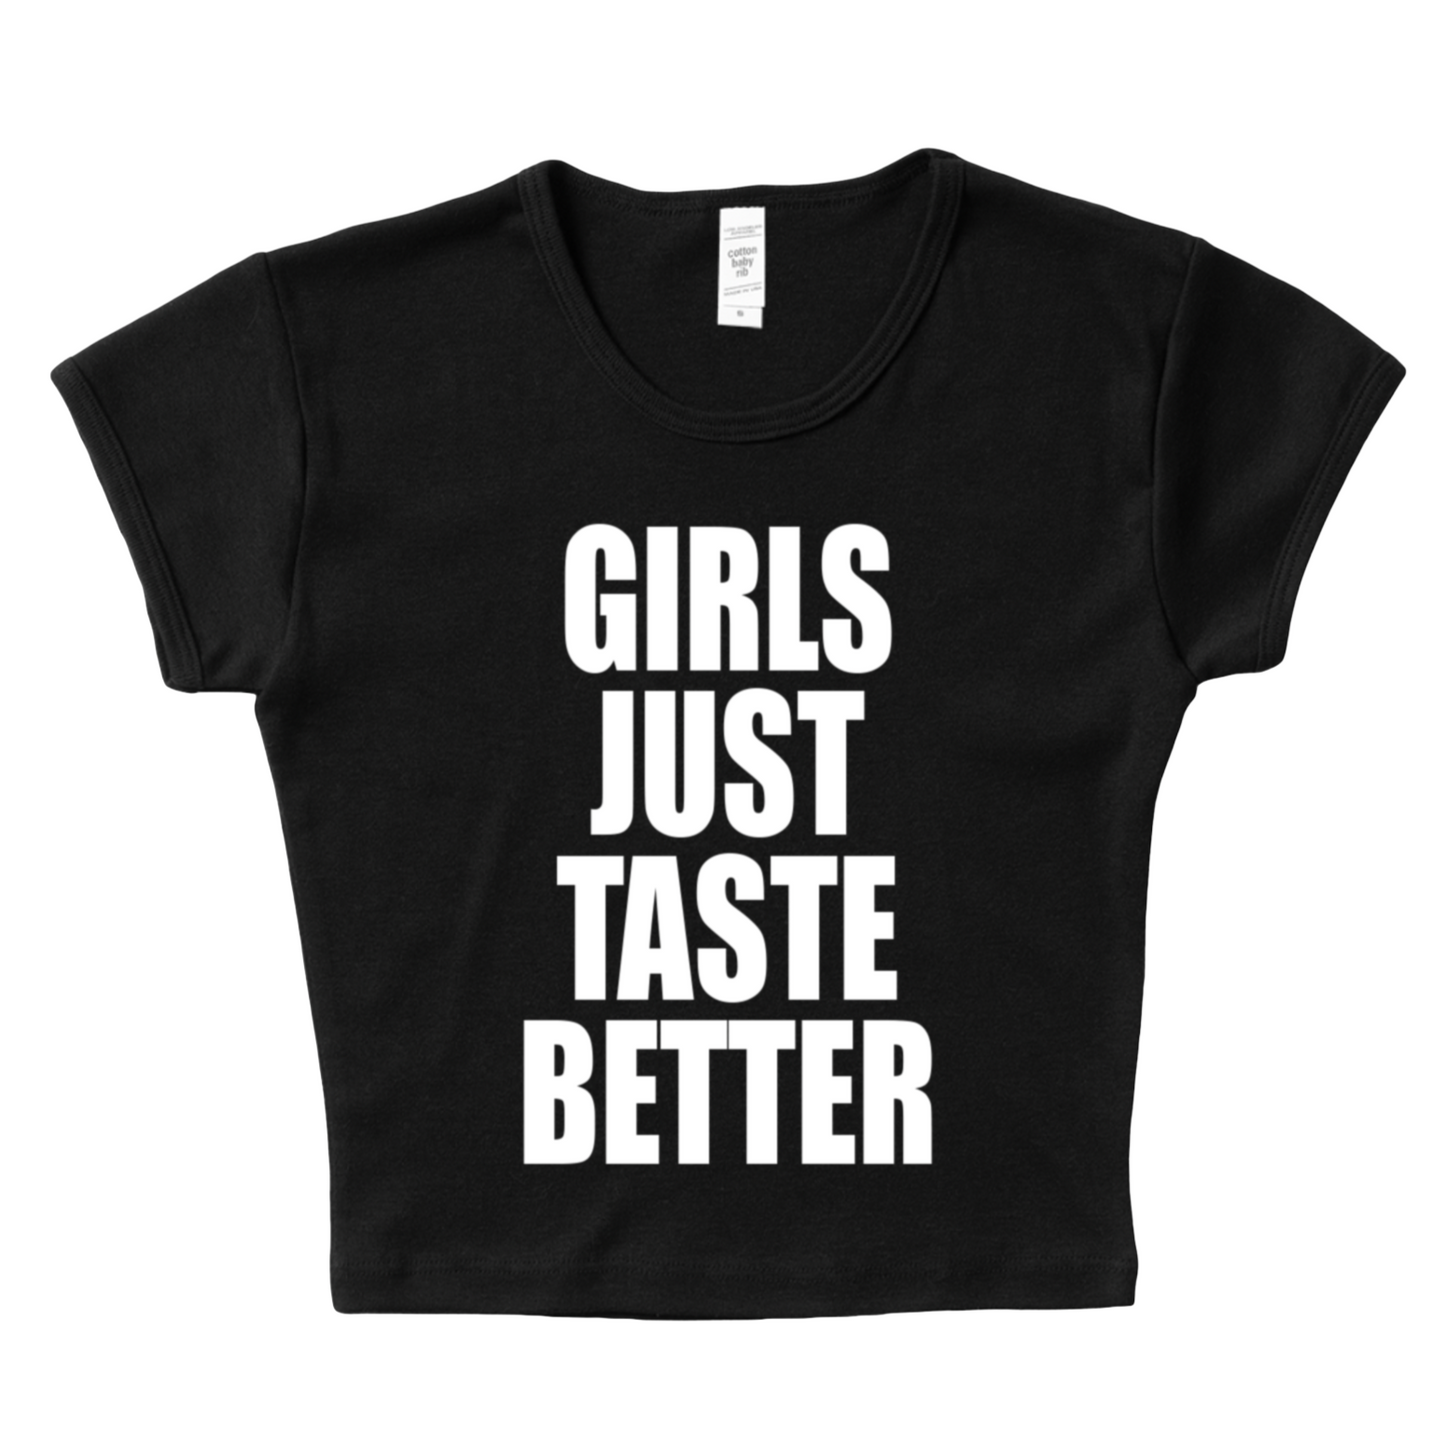 Girls Just Taste Better Baby Tee